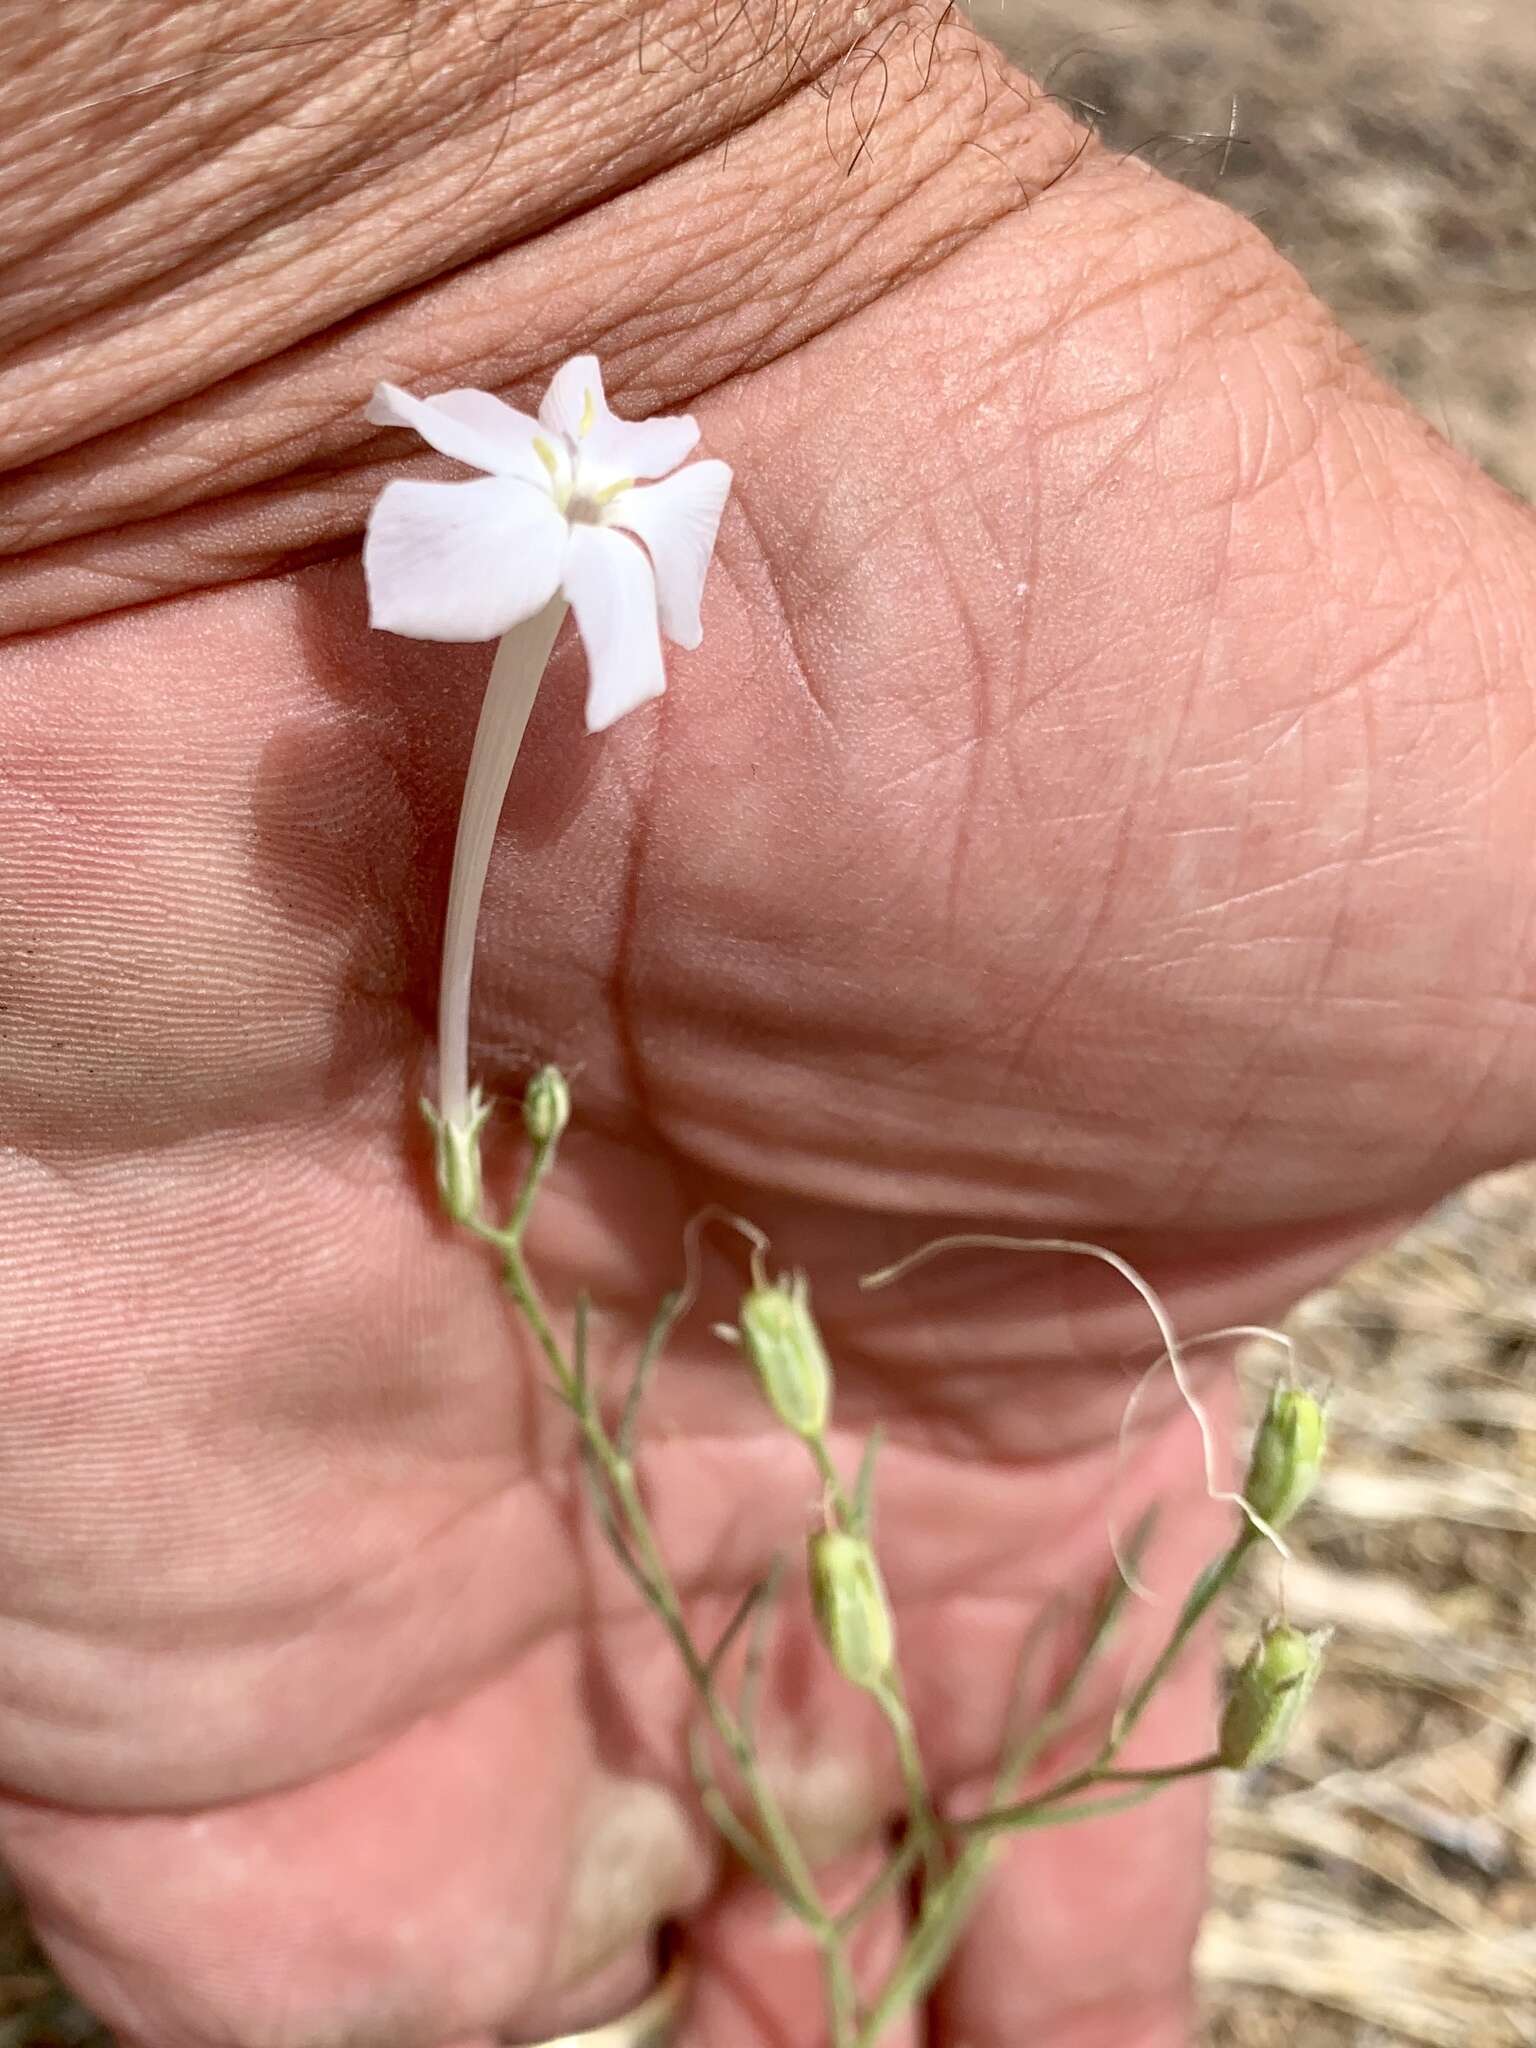 Image of whiteflower ipomopsis